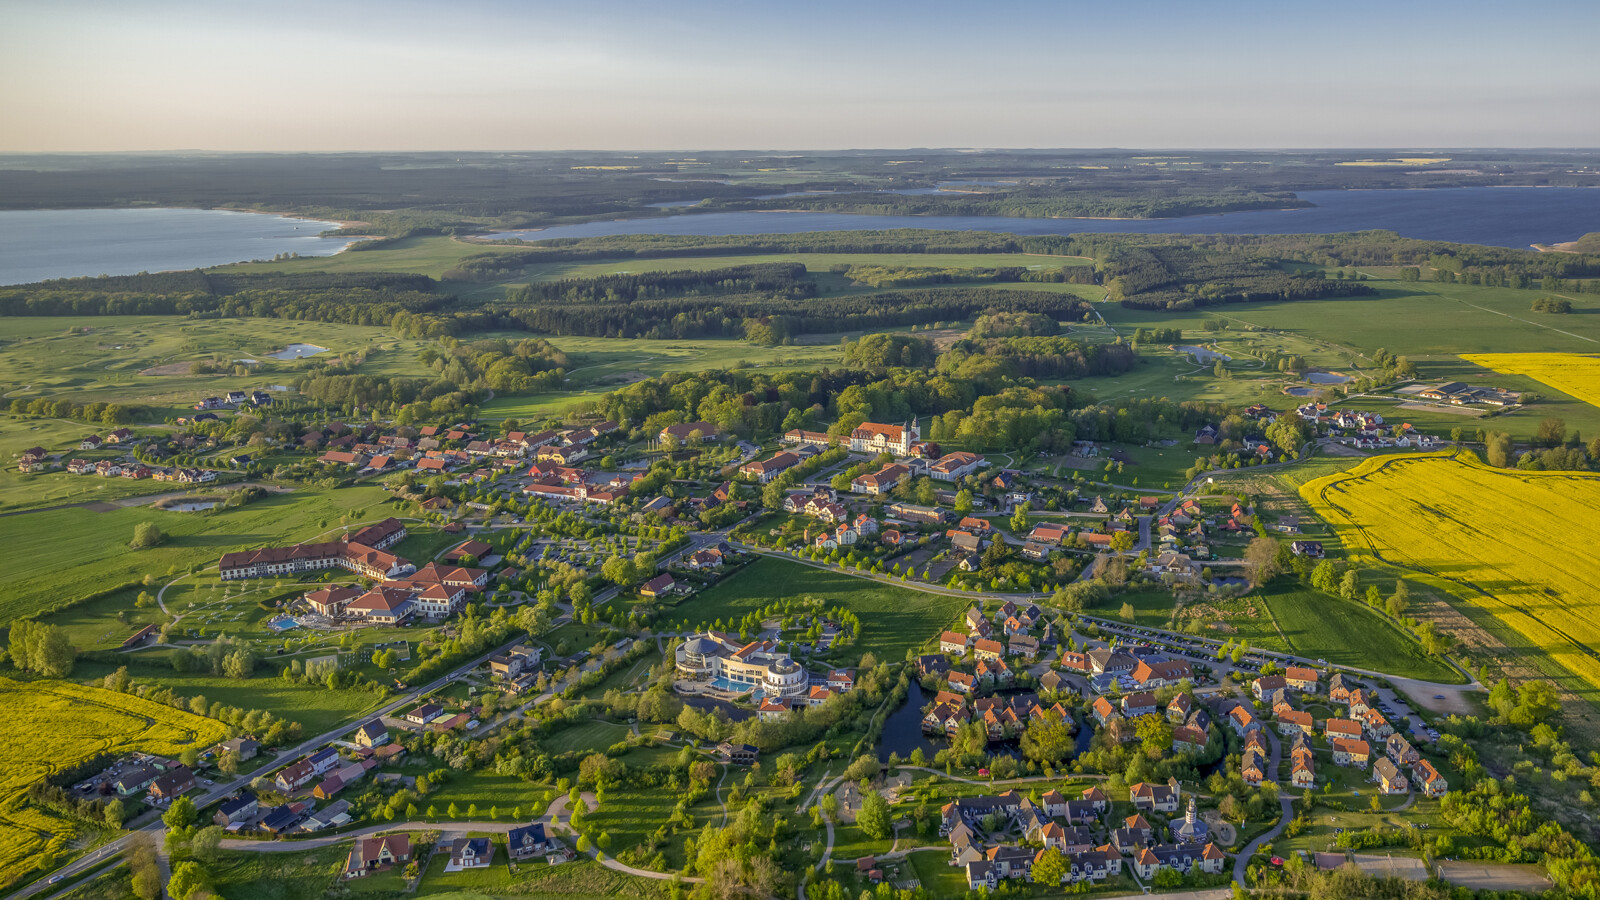 Luftbild von Göhren-Lebbin mit dem Robinsonclub Fleesensee, Blücherschloss, Schloss Blücher, dem BEECH Resort und dem Schloss Fleensensee.